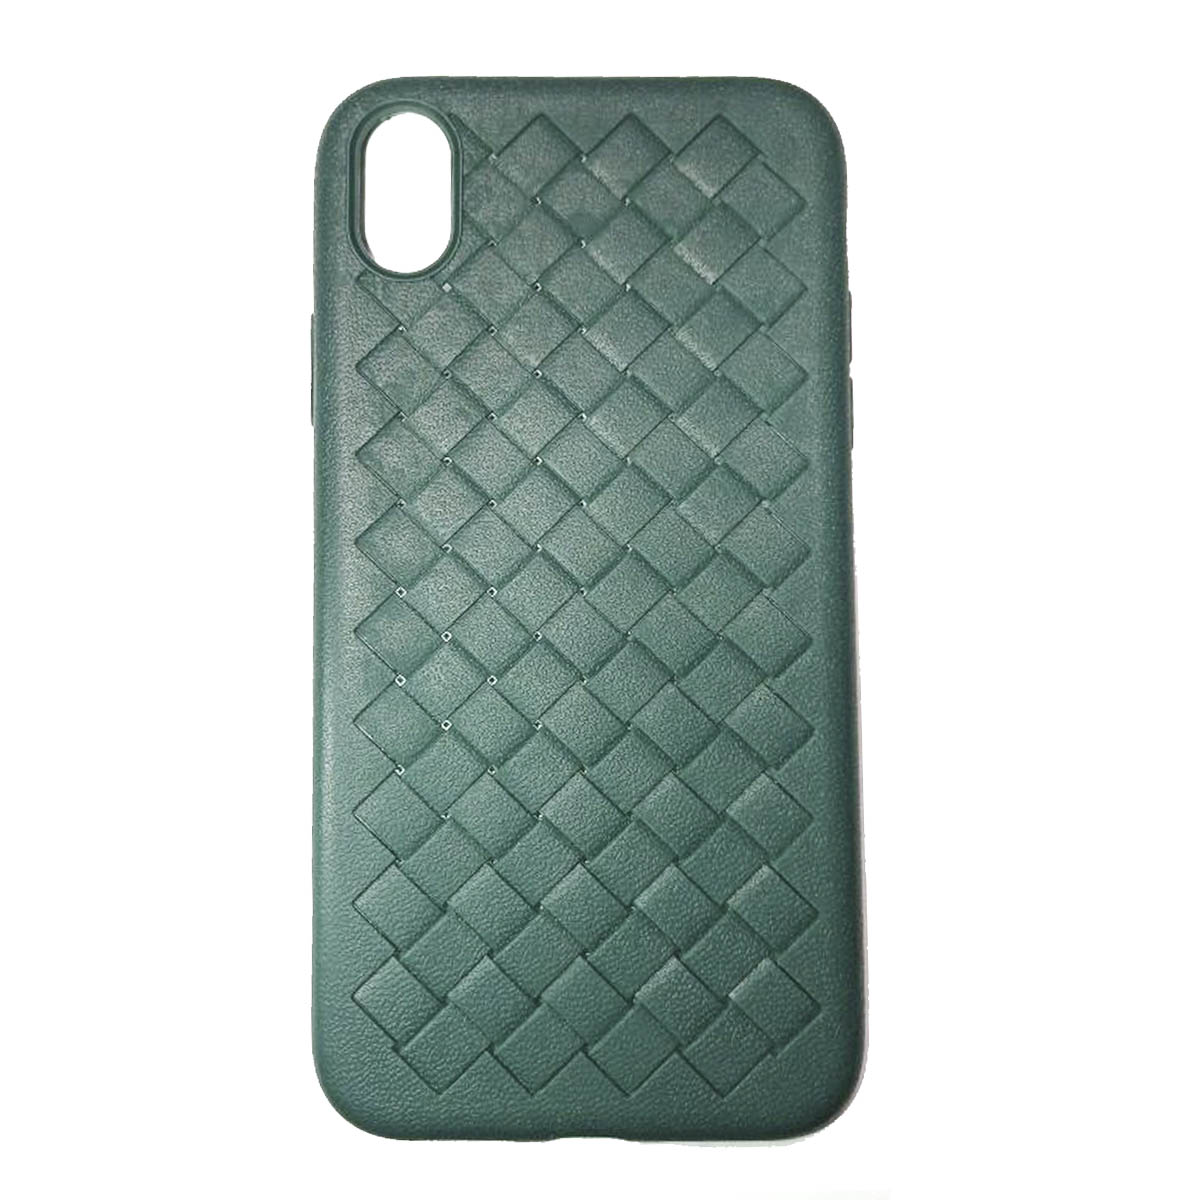 Чехол накладка для APPLE iPhone XR, силикон, плетение, цвет темно зеленый